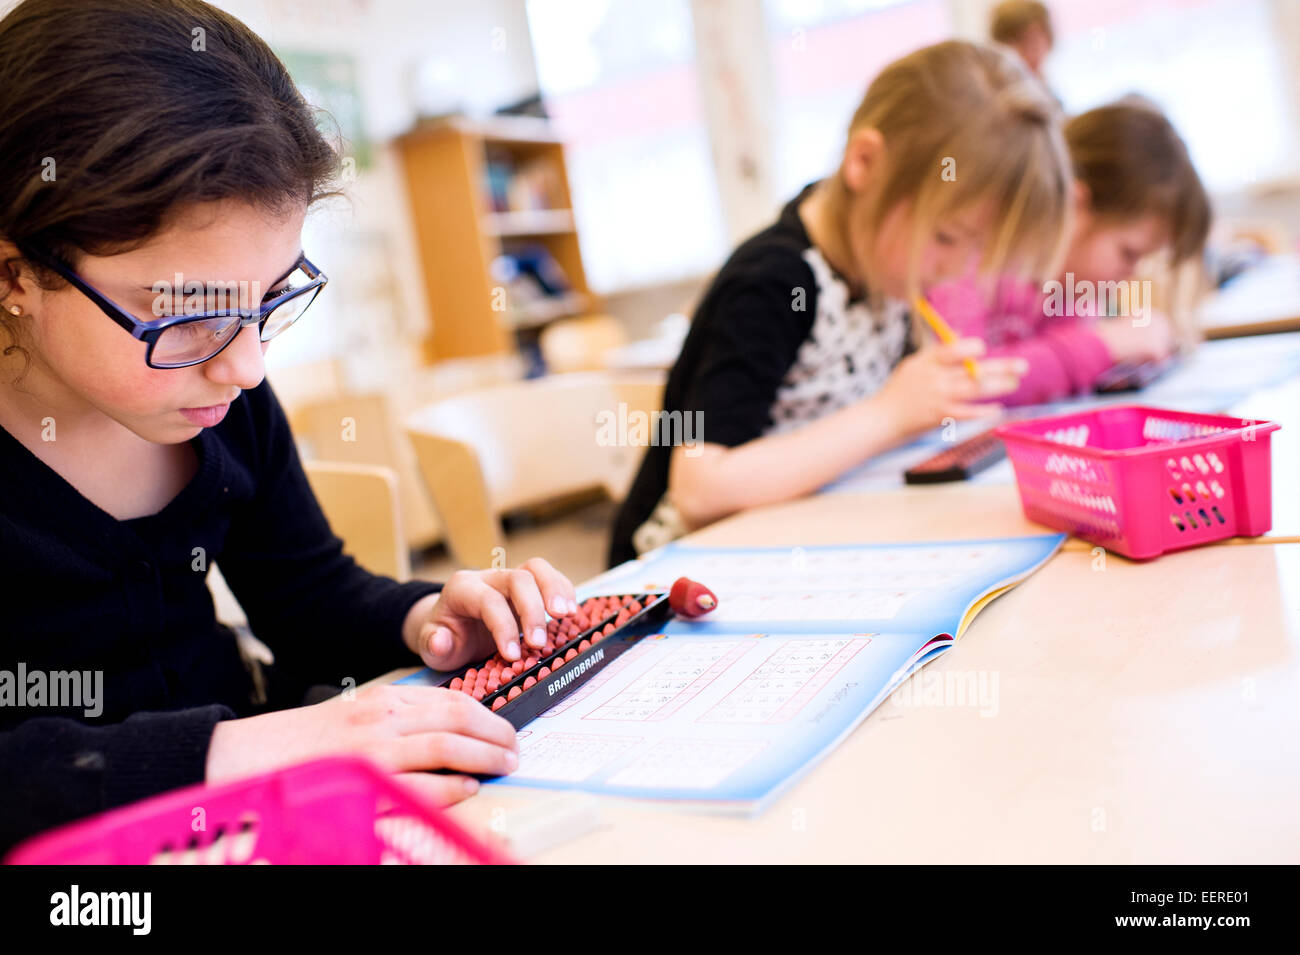 Children in school working with mathematics Stock Photo